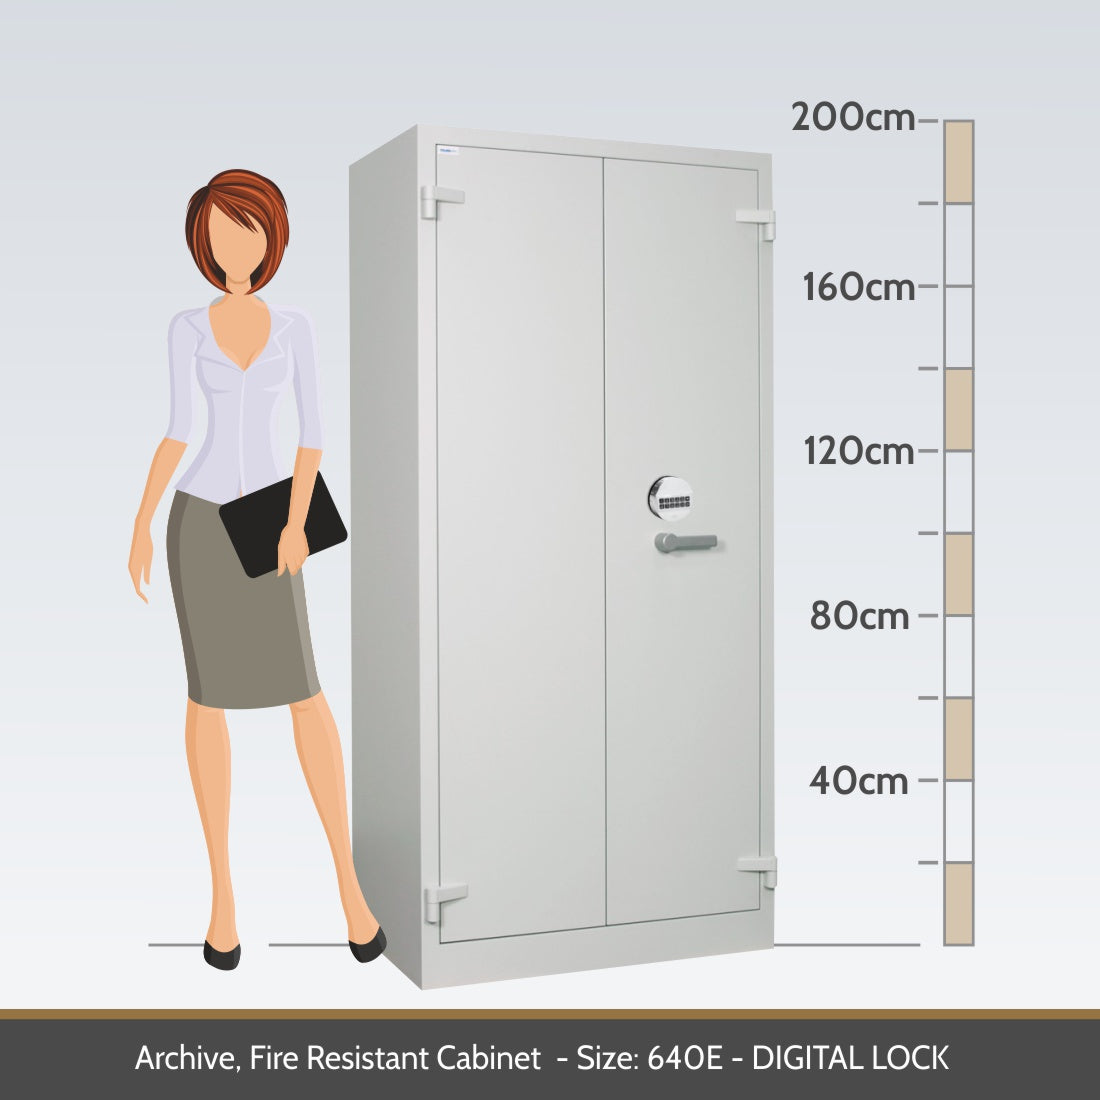 Archive Fire-Resistant Document Cabinet Size: 640E - DIGITAL LOCK